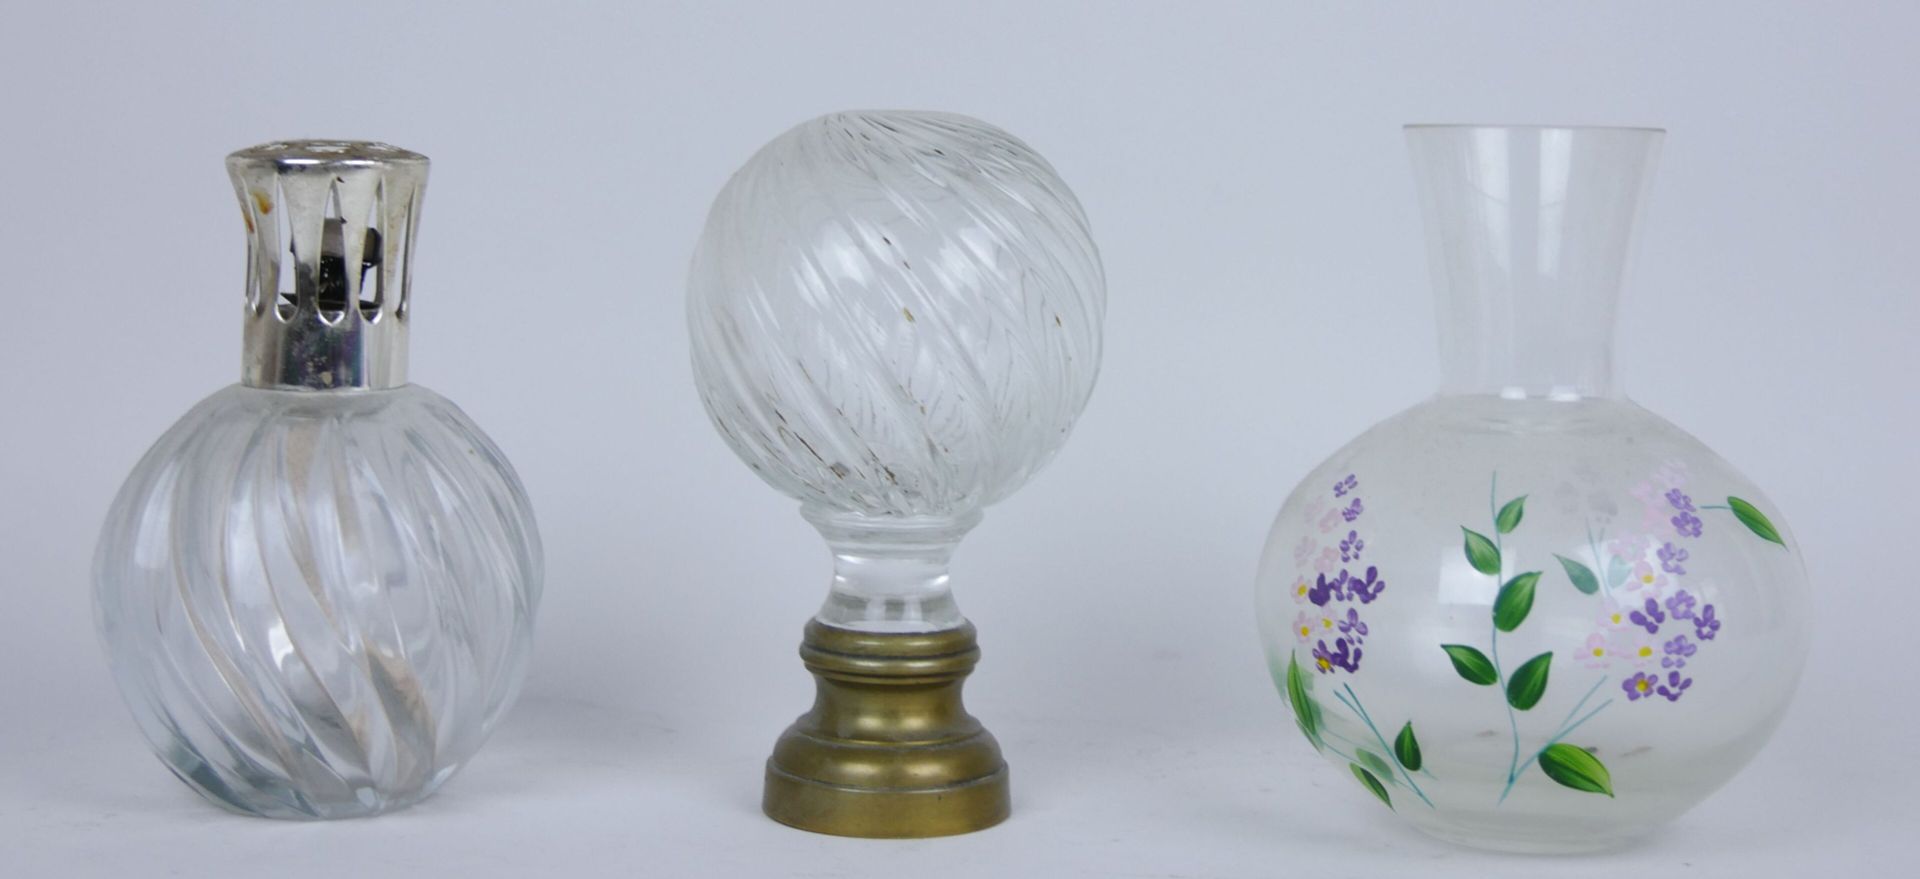 Null 很多小饰品，包括:

一个玻璃和金属的楼梯球。尺寸：17 x 8.5厘米

一个镀金的金属烛台，轴上有栏杆。高度：26厘米

BERGER，模制玻璃香&hellip;